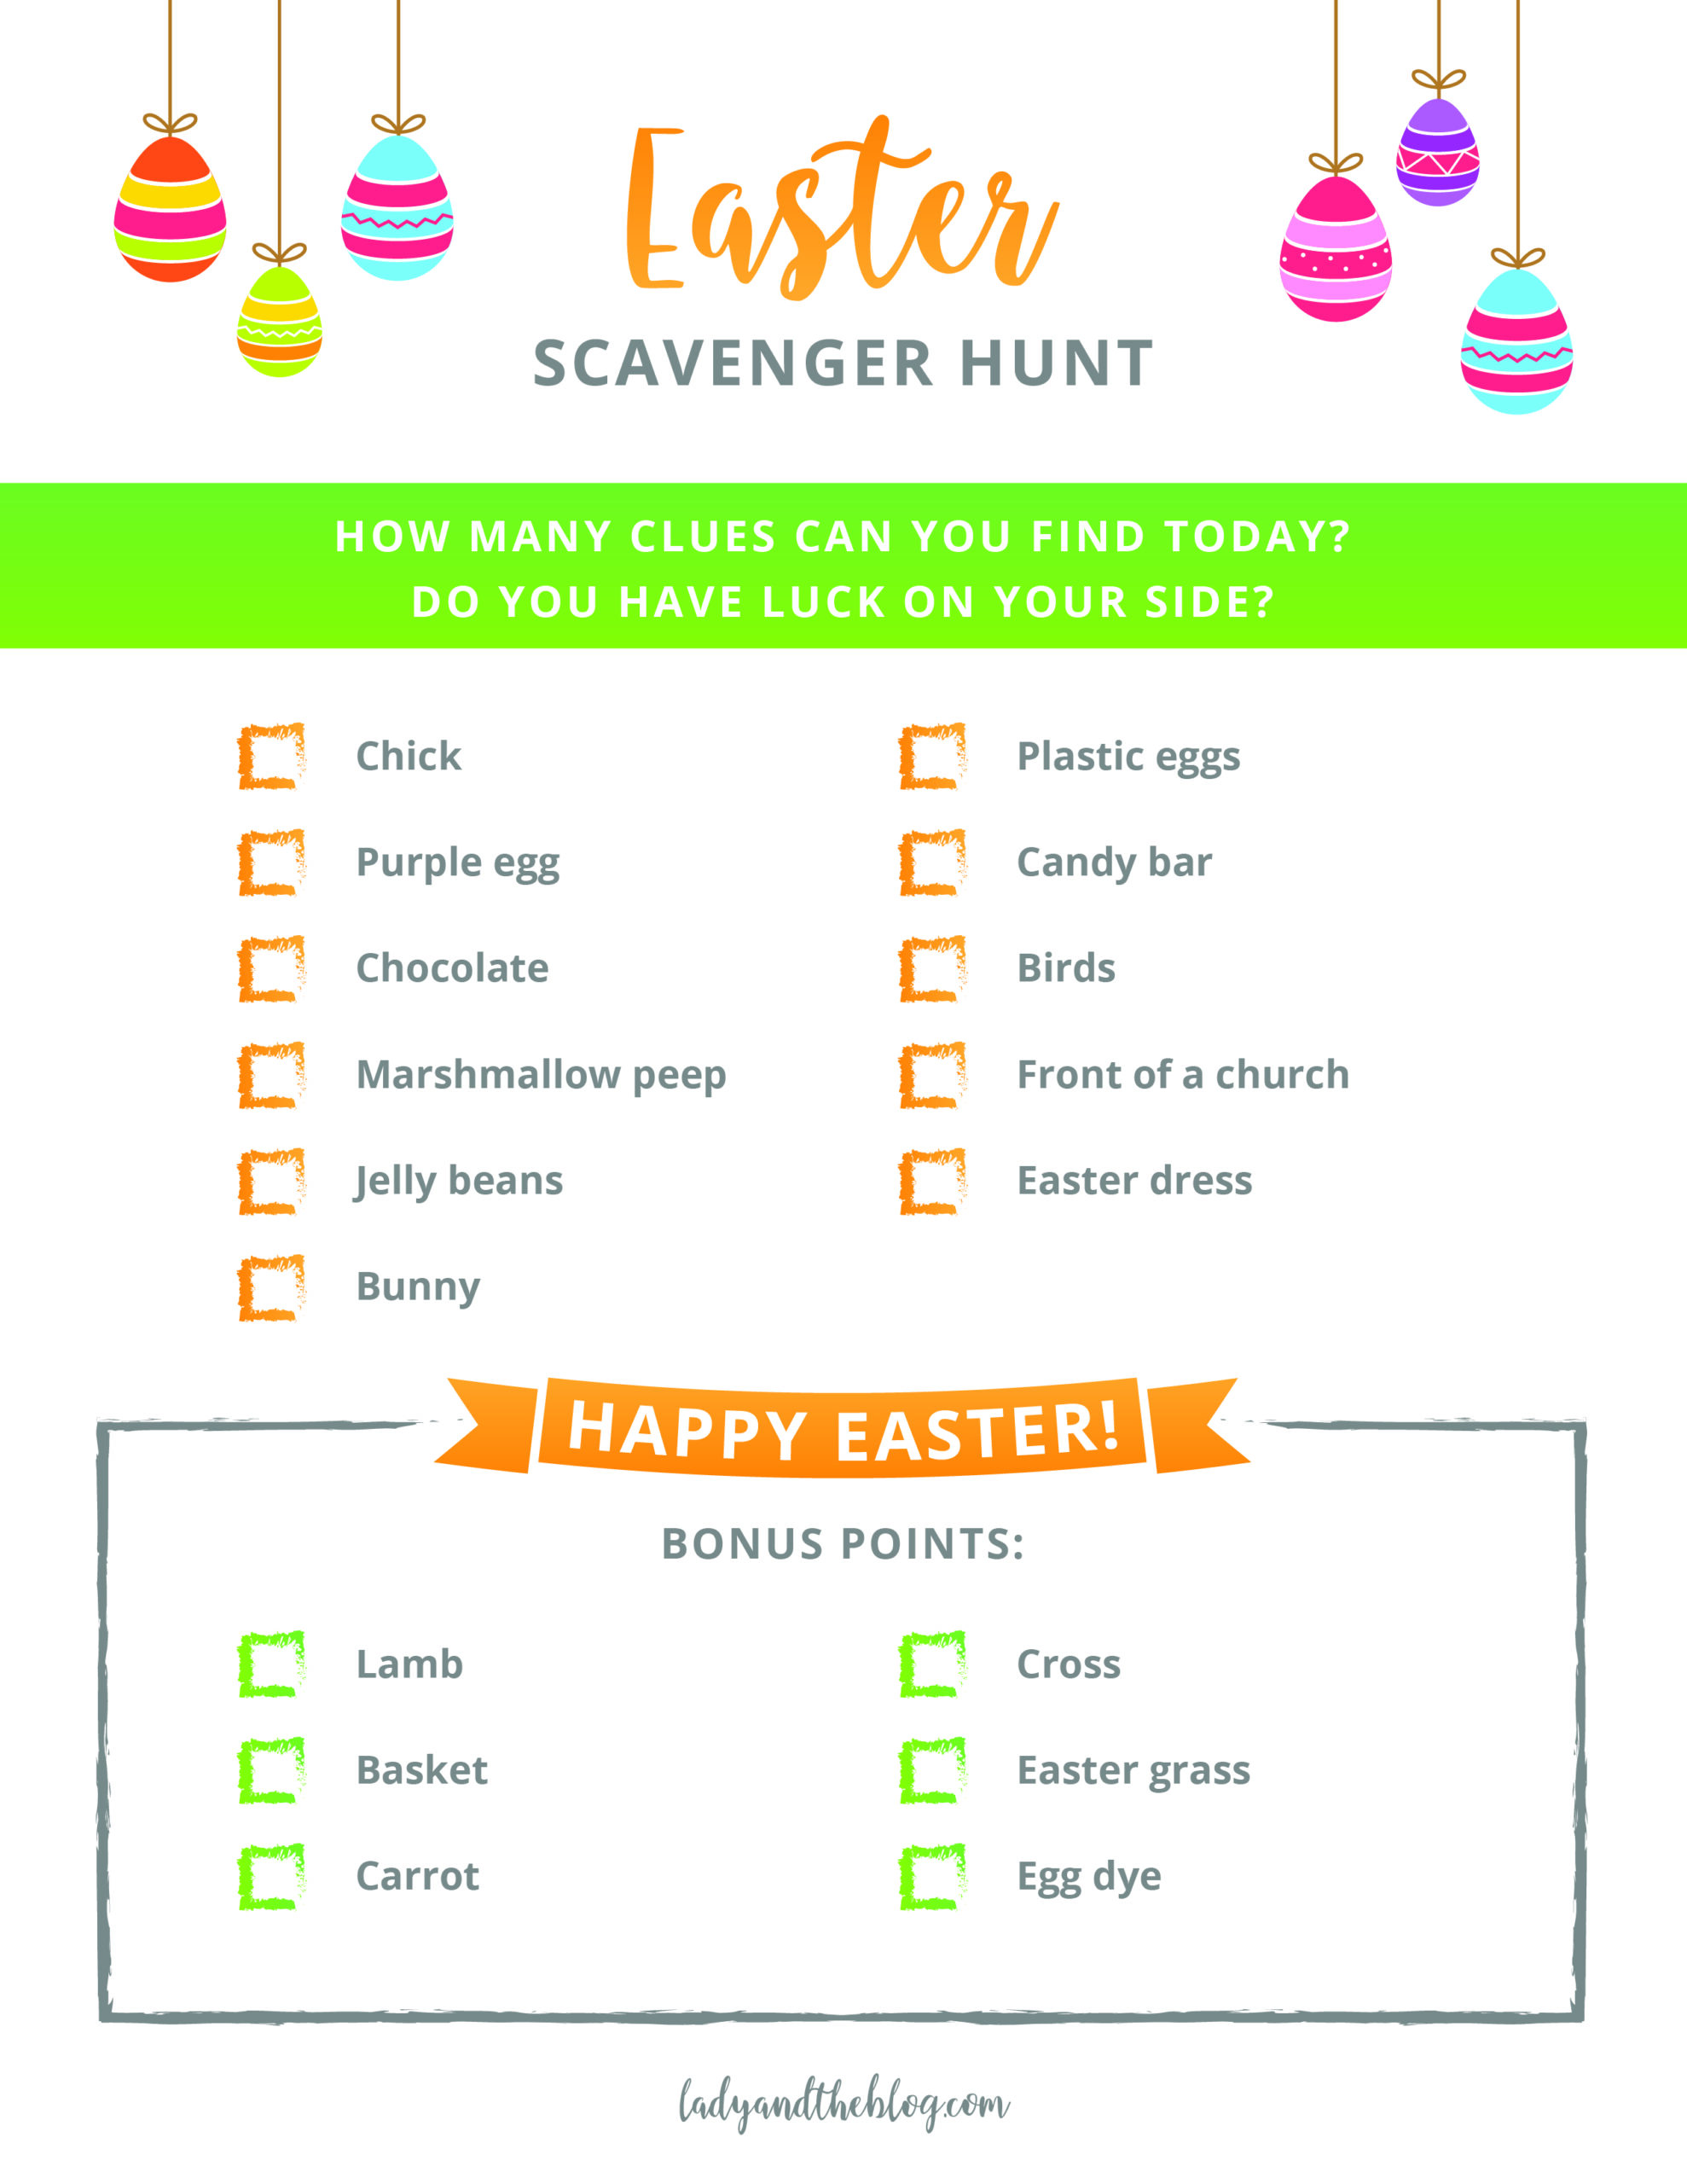 Easter Scavenger Hunt for kids